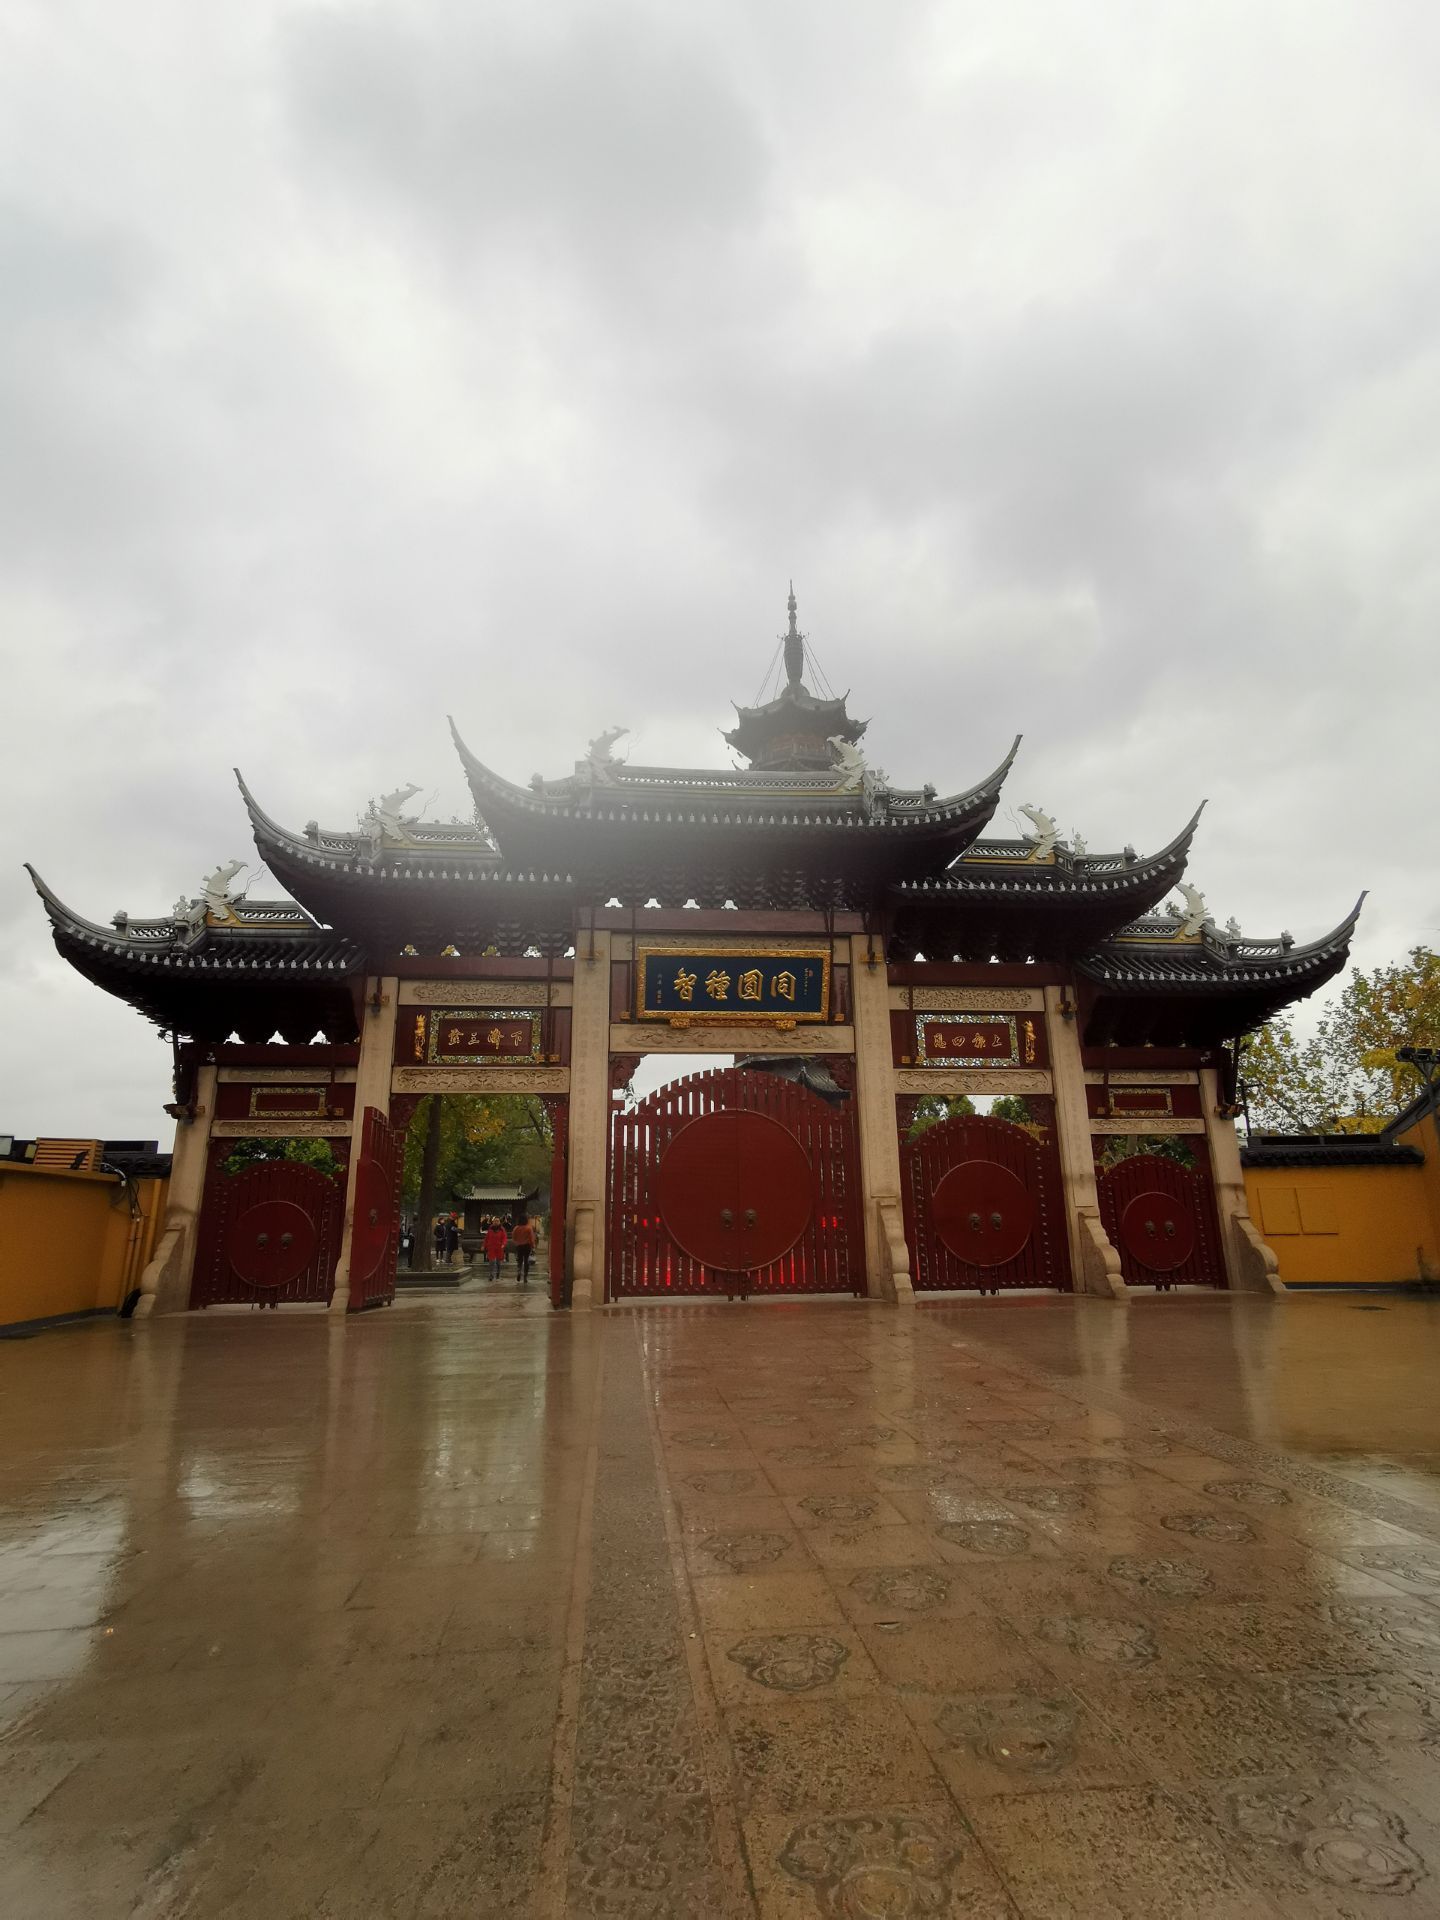 龙华寺longhua si